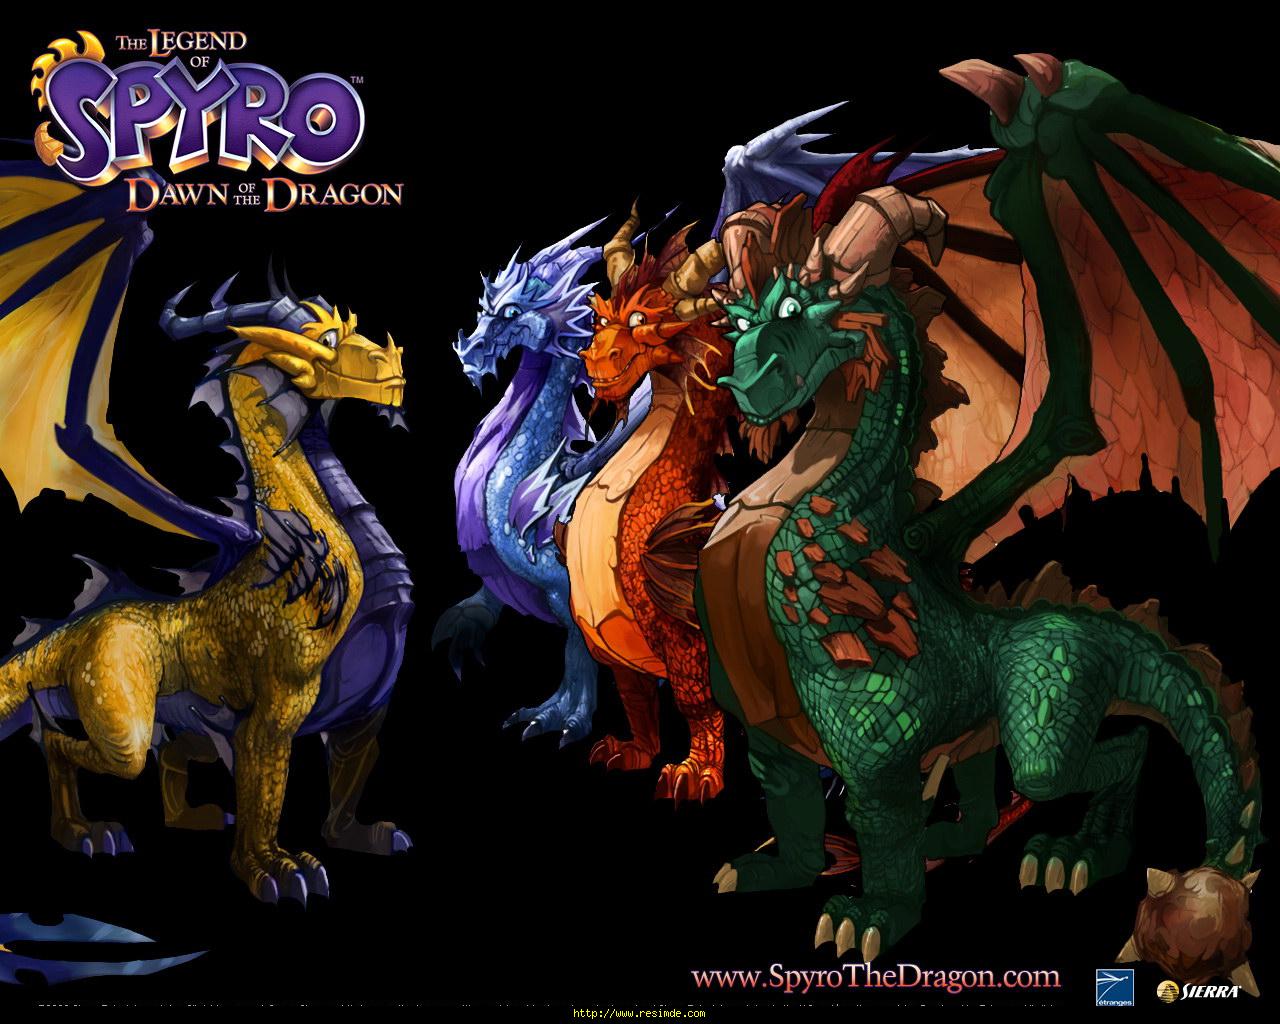 image-legend-of-spyro-dawn-of-the-dragon-oyunu-944674-jpg-idea-wiki-fandom-powered-by-wikia